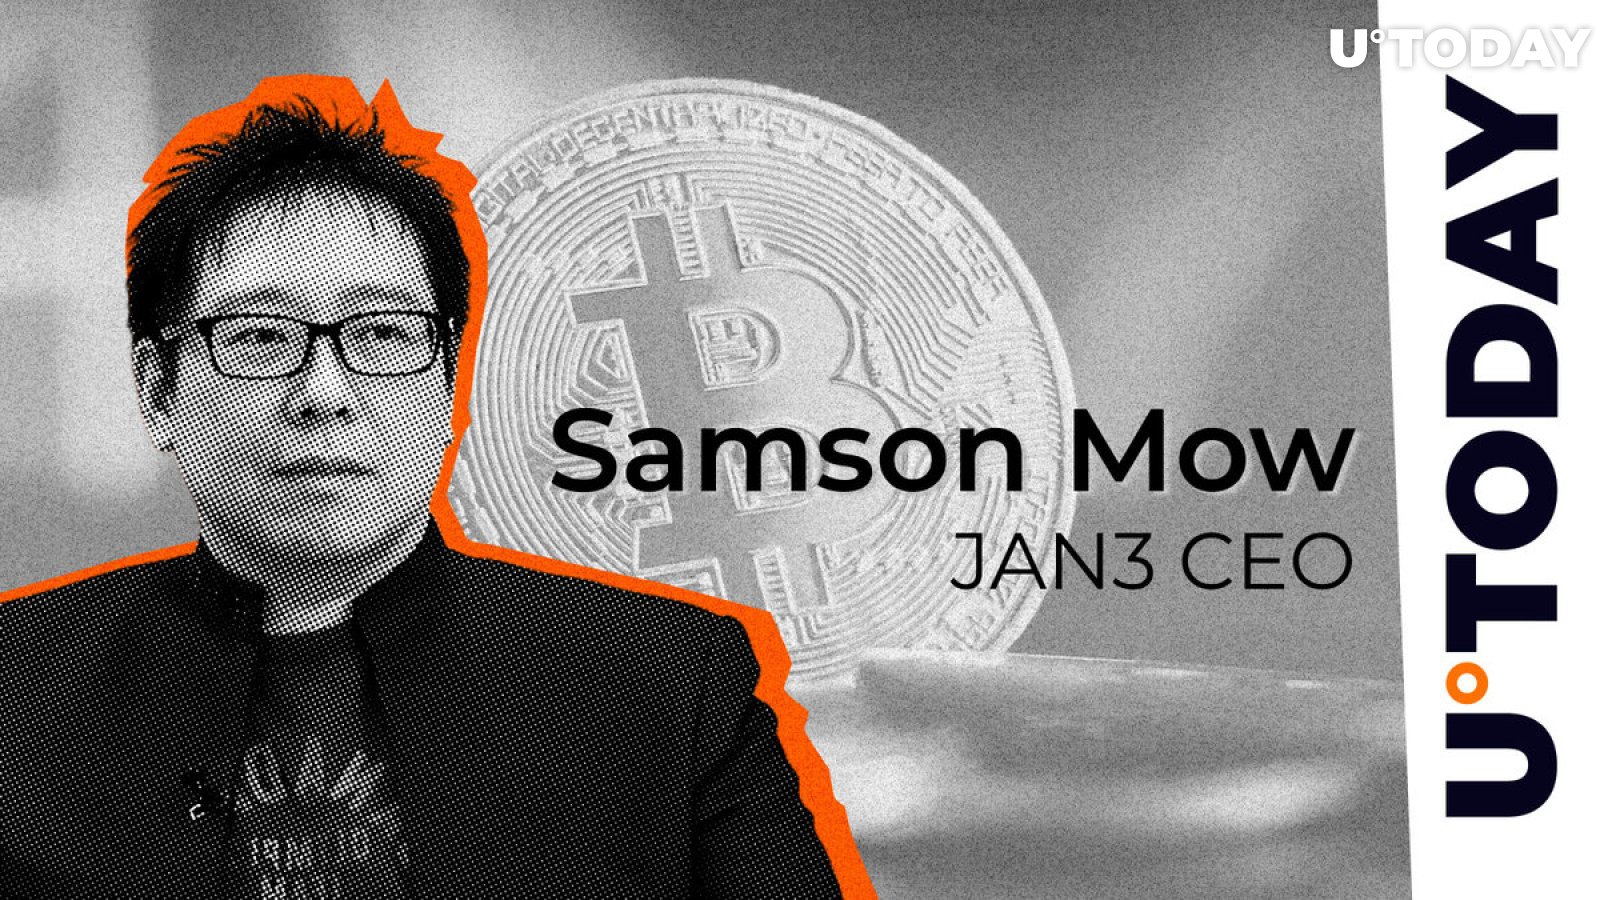 Samson Mow Issues Optimistic Bitcoin Statement as BTC Falls Below $62,000